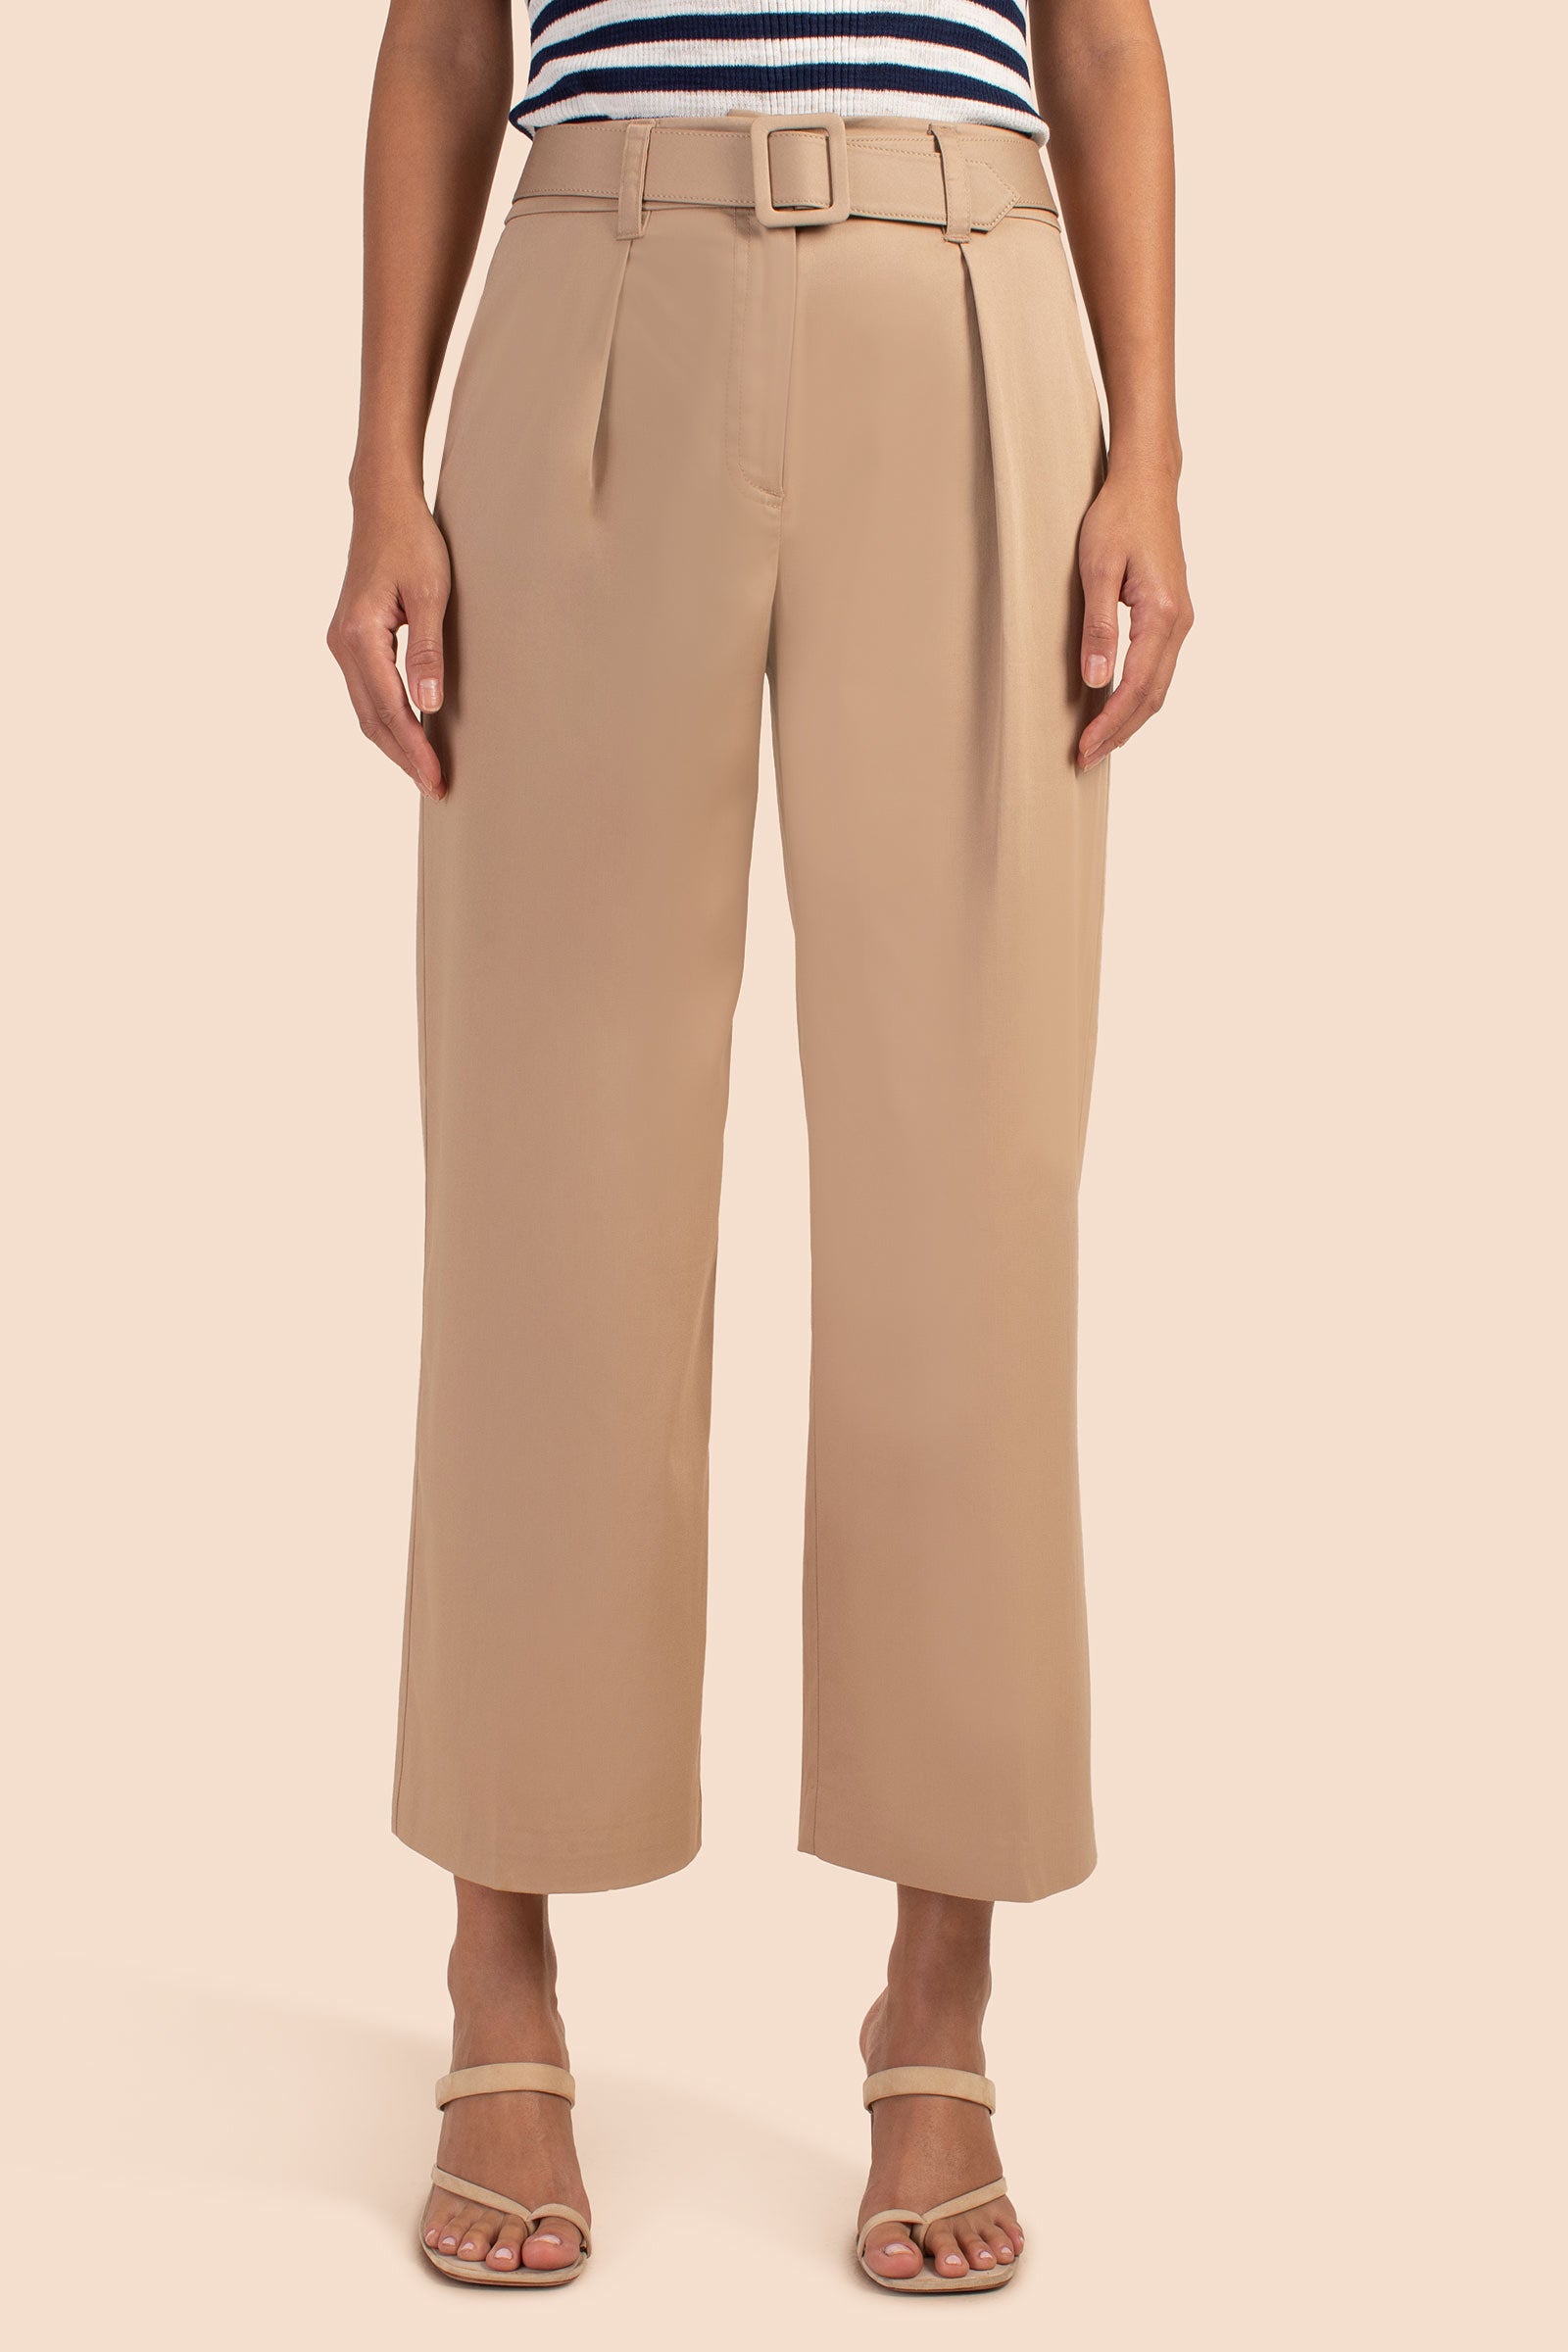 TRINA TURK Vintage Brown Linen Low Waist Wide Leg Summer Pants Trousers XS  -  Norway